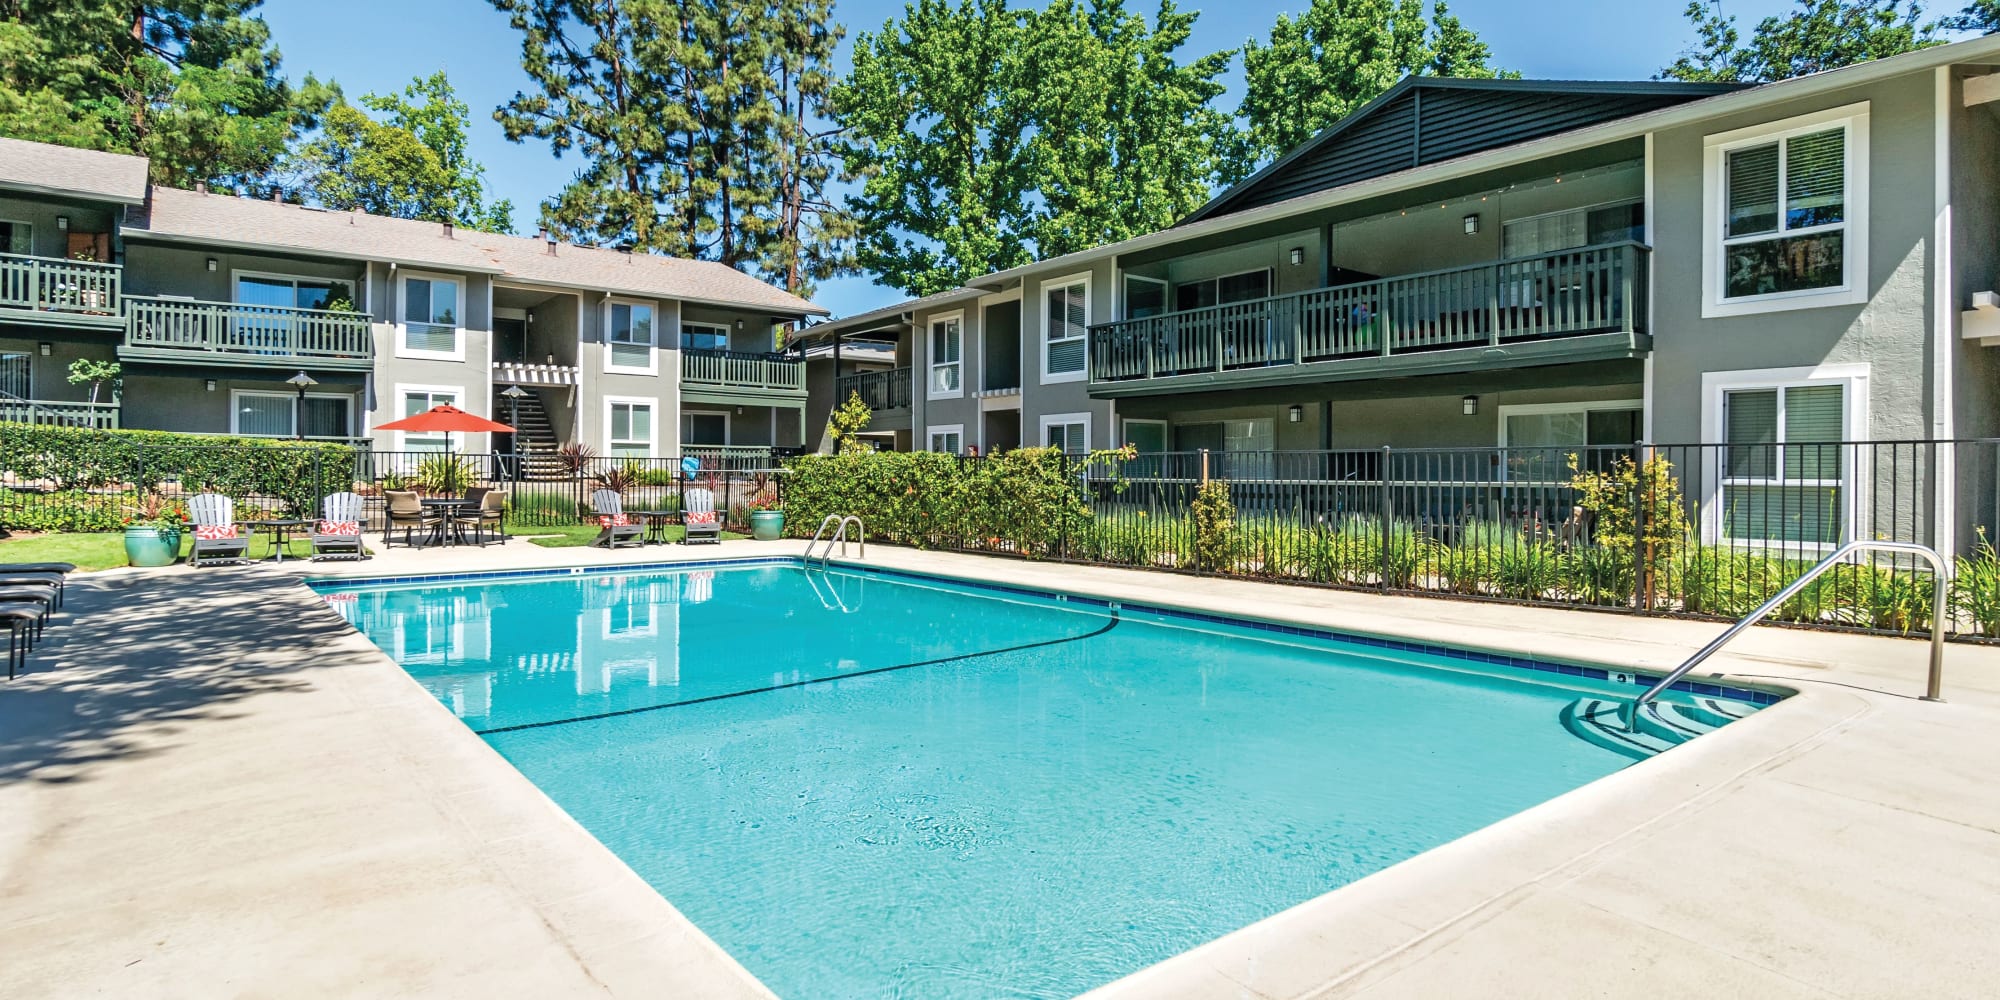 Enjoy a swimming pool at Pleasanton Glen Apartment Homes in Pleasanton, CA